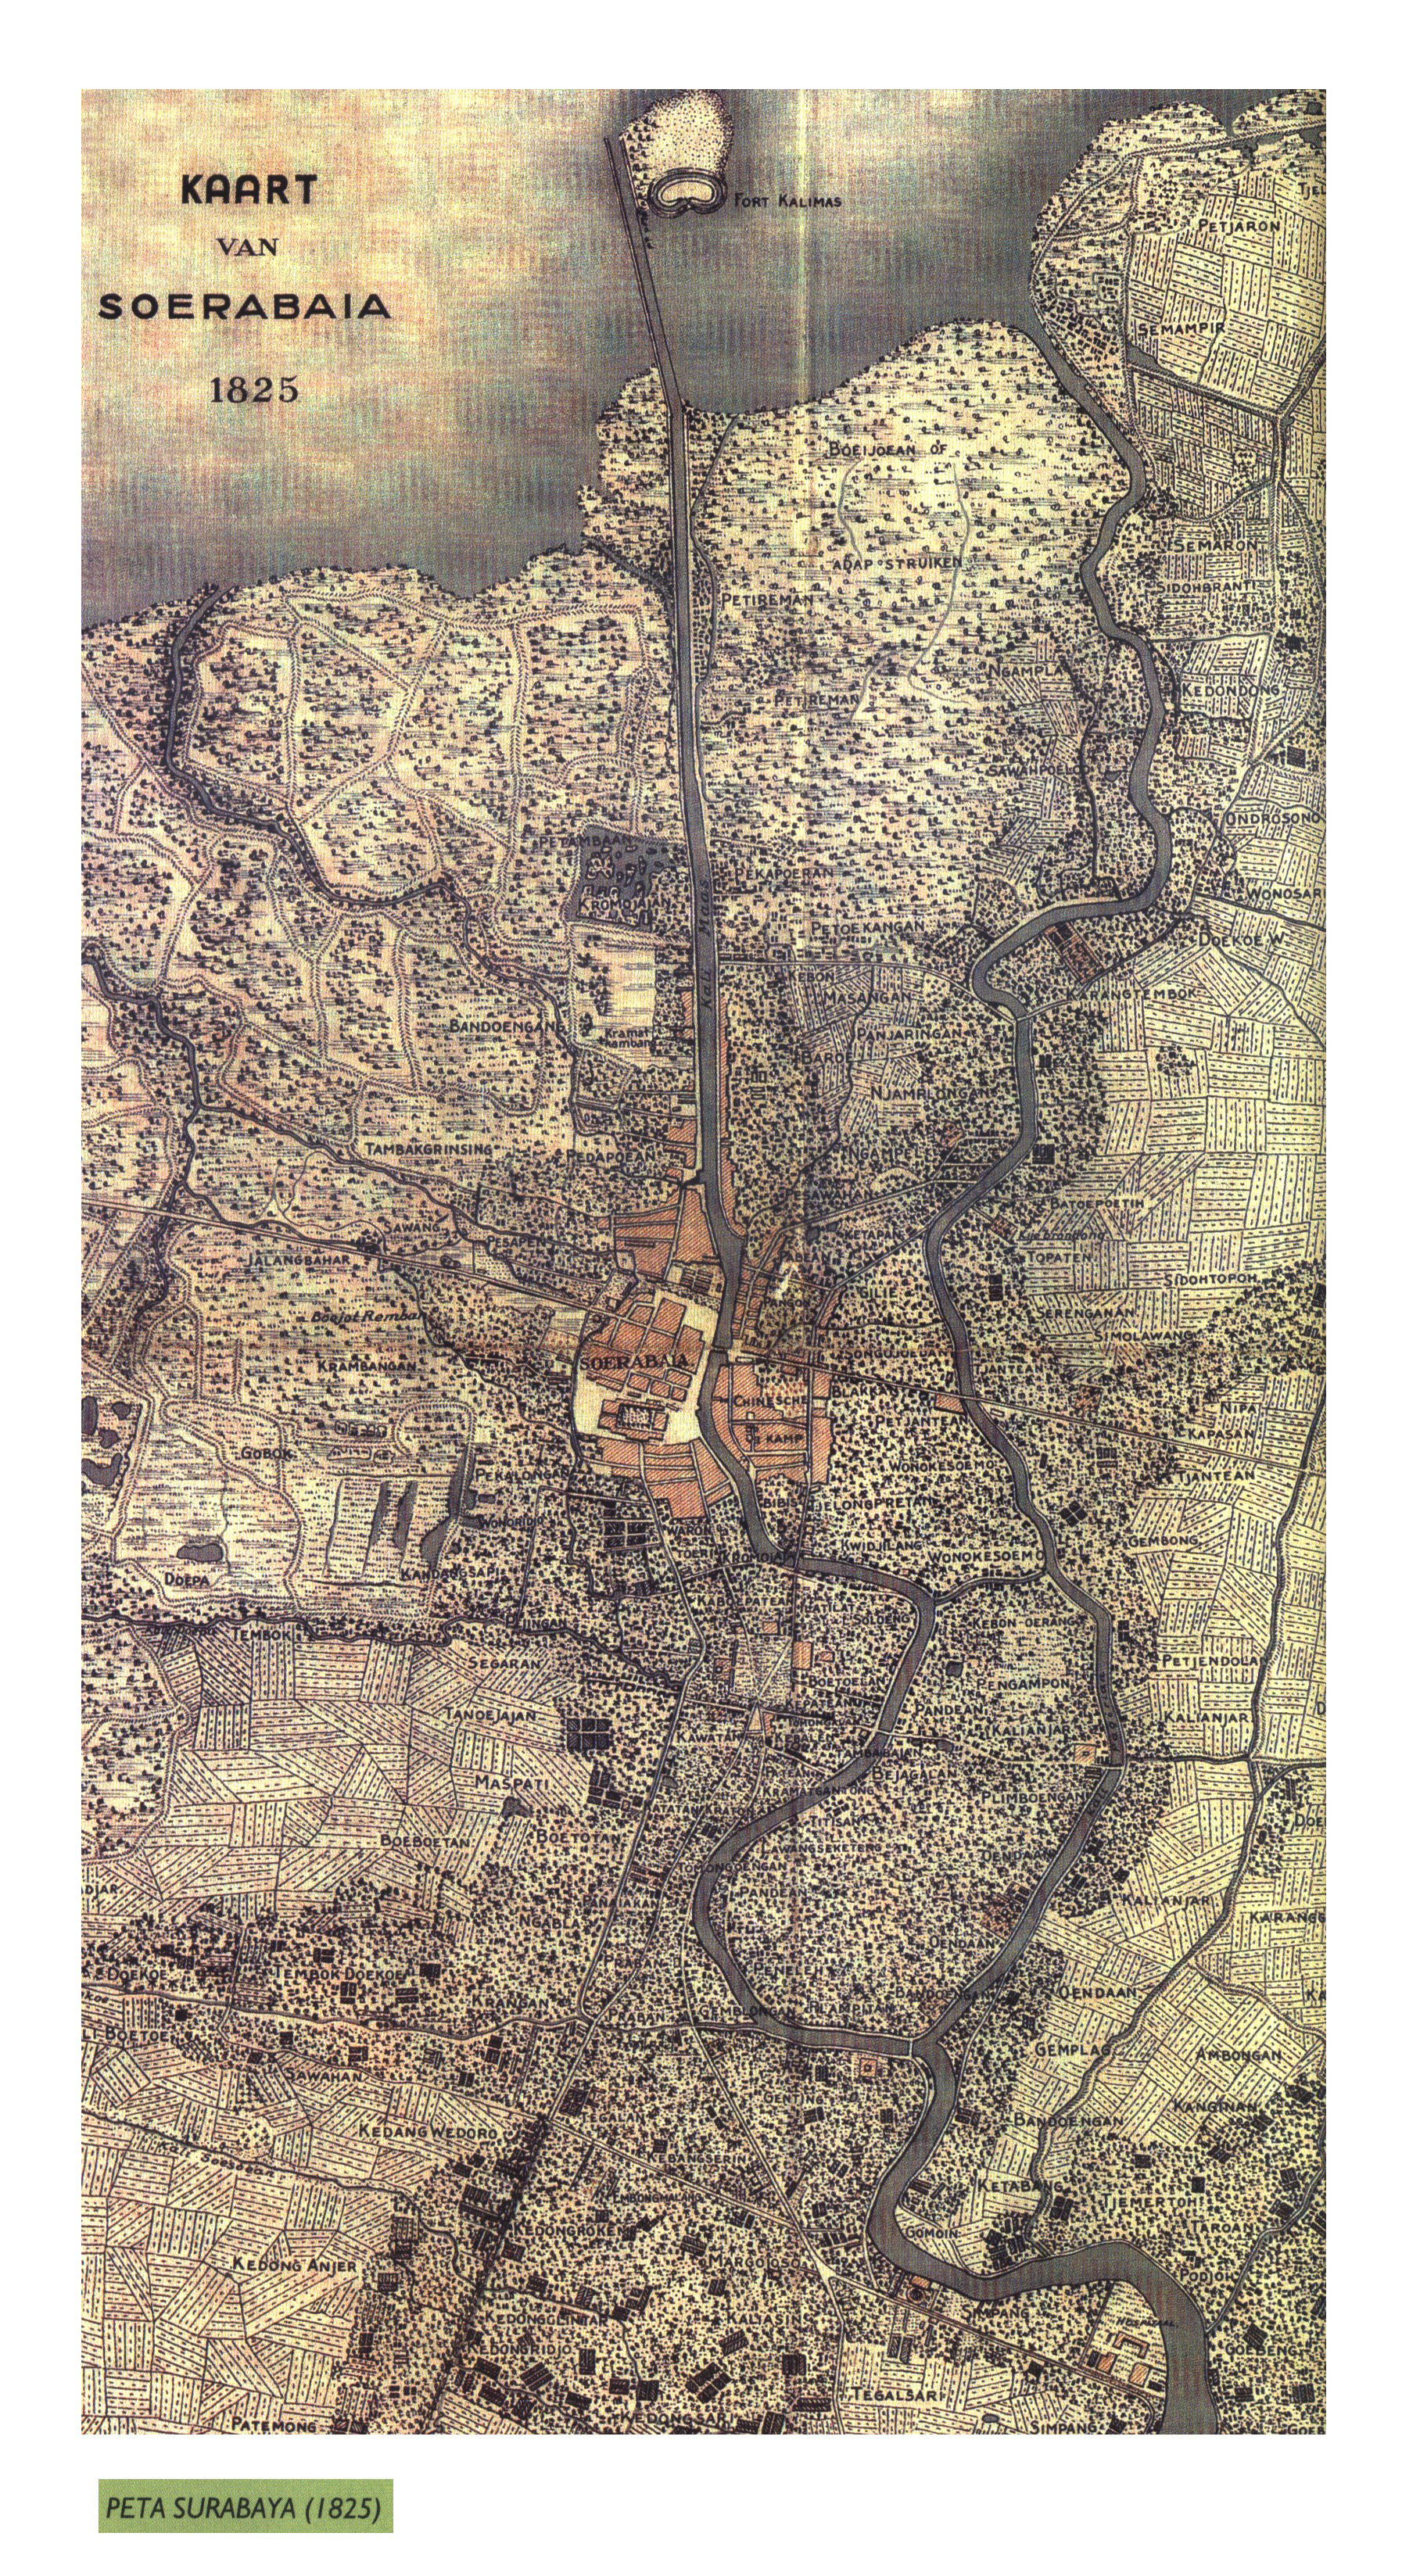 Surabaya in 1825. Map provided by the Badan Perencanaan Pembangunan Kota Surabaya (BAPPEKO Surabaya).